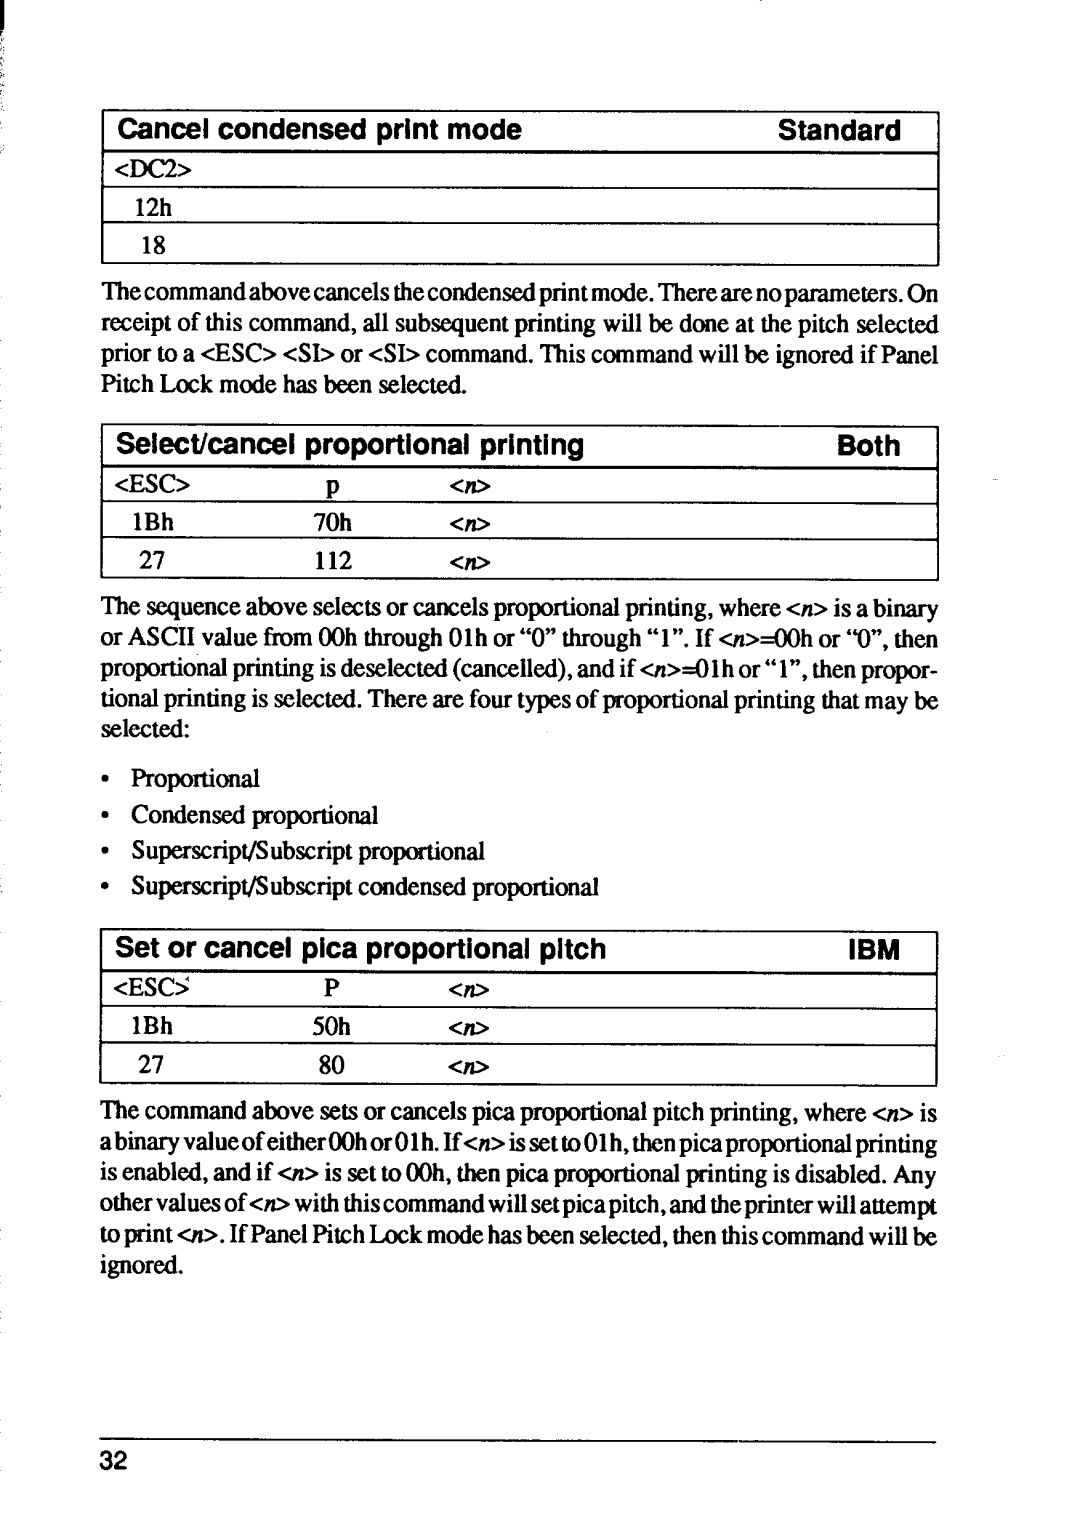 Star Micronics XB24-10, XB24-15 user manual Cancel condensed print mode, Selectkancel, proportional printing, Both, Standard 